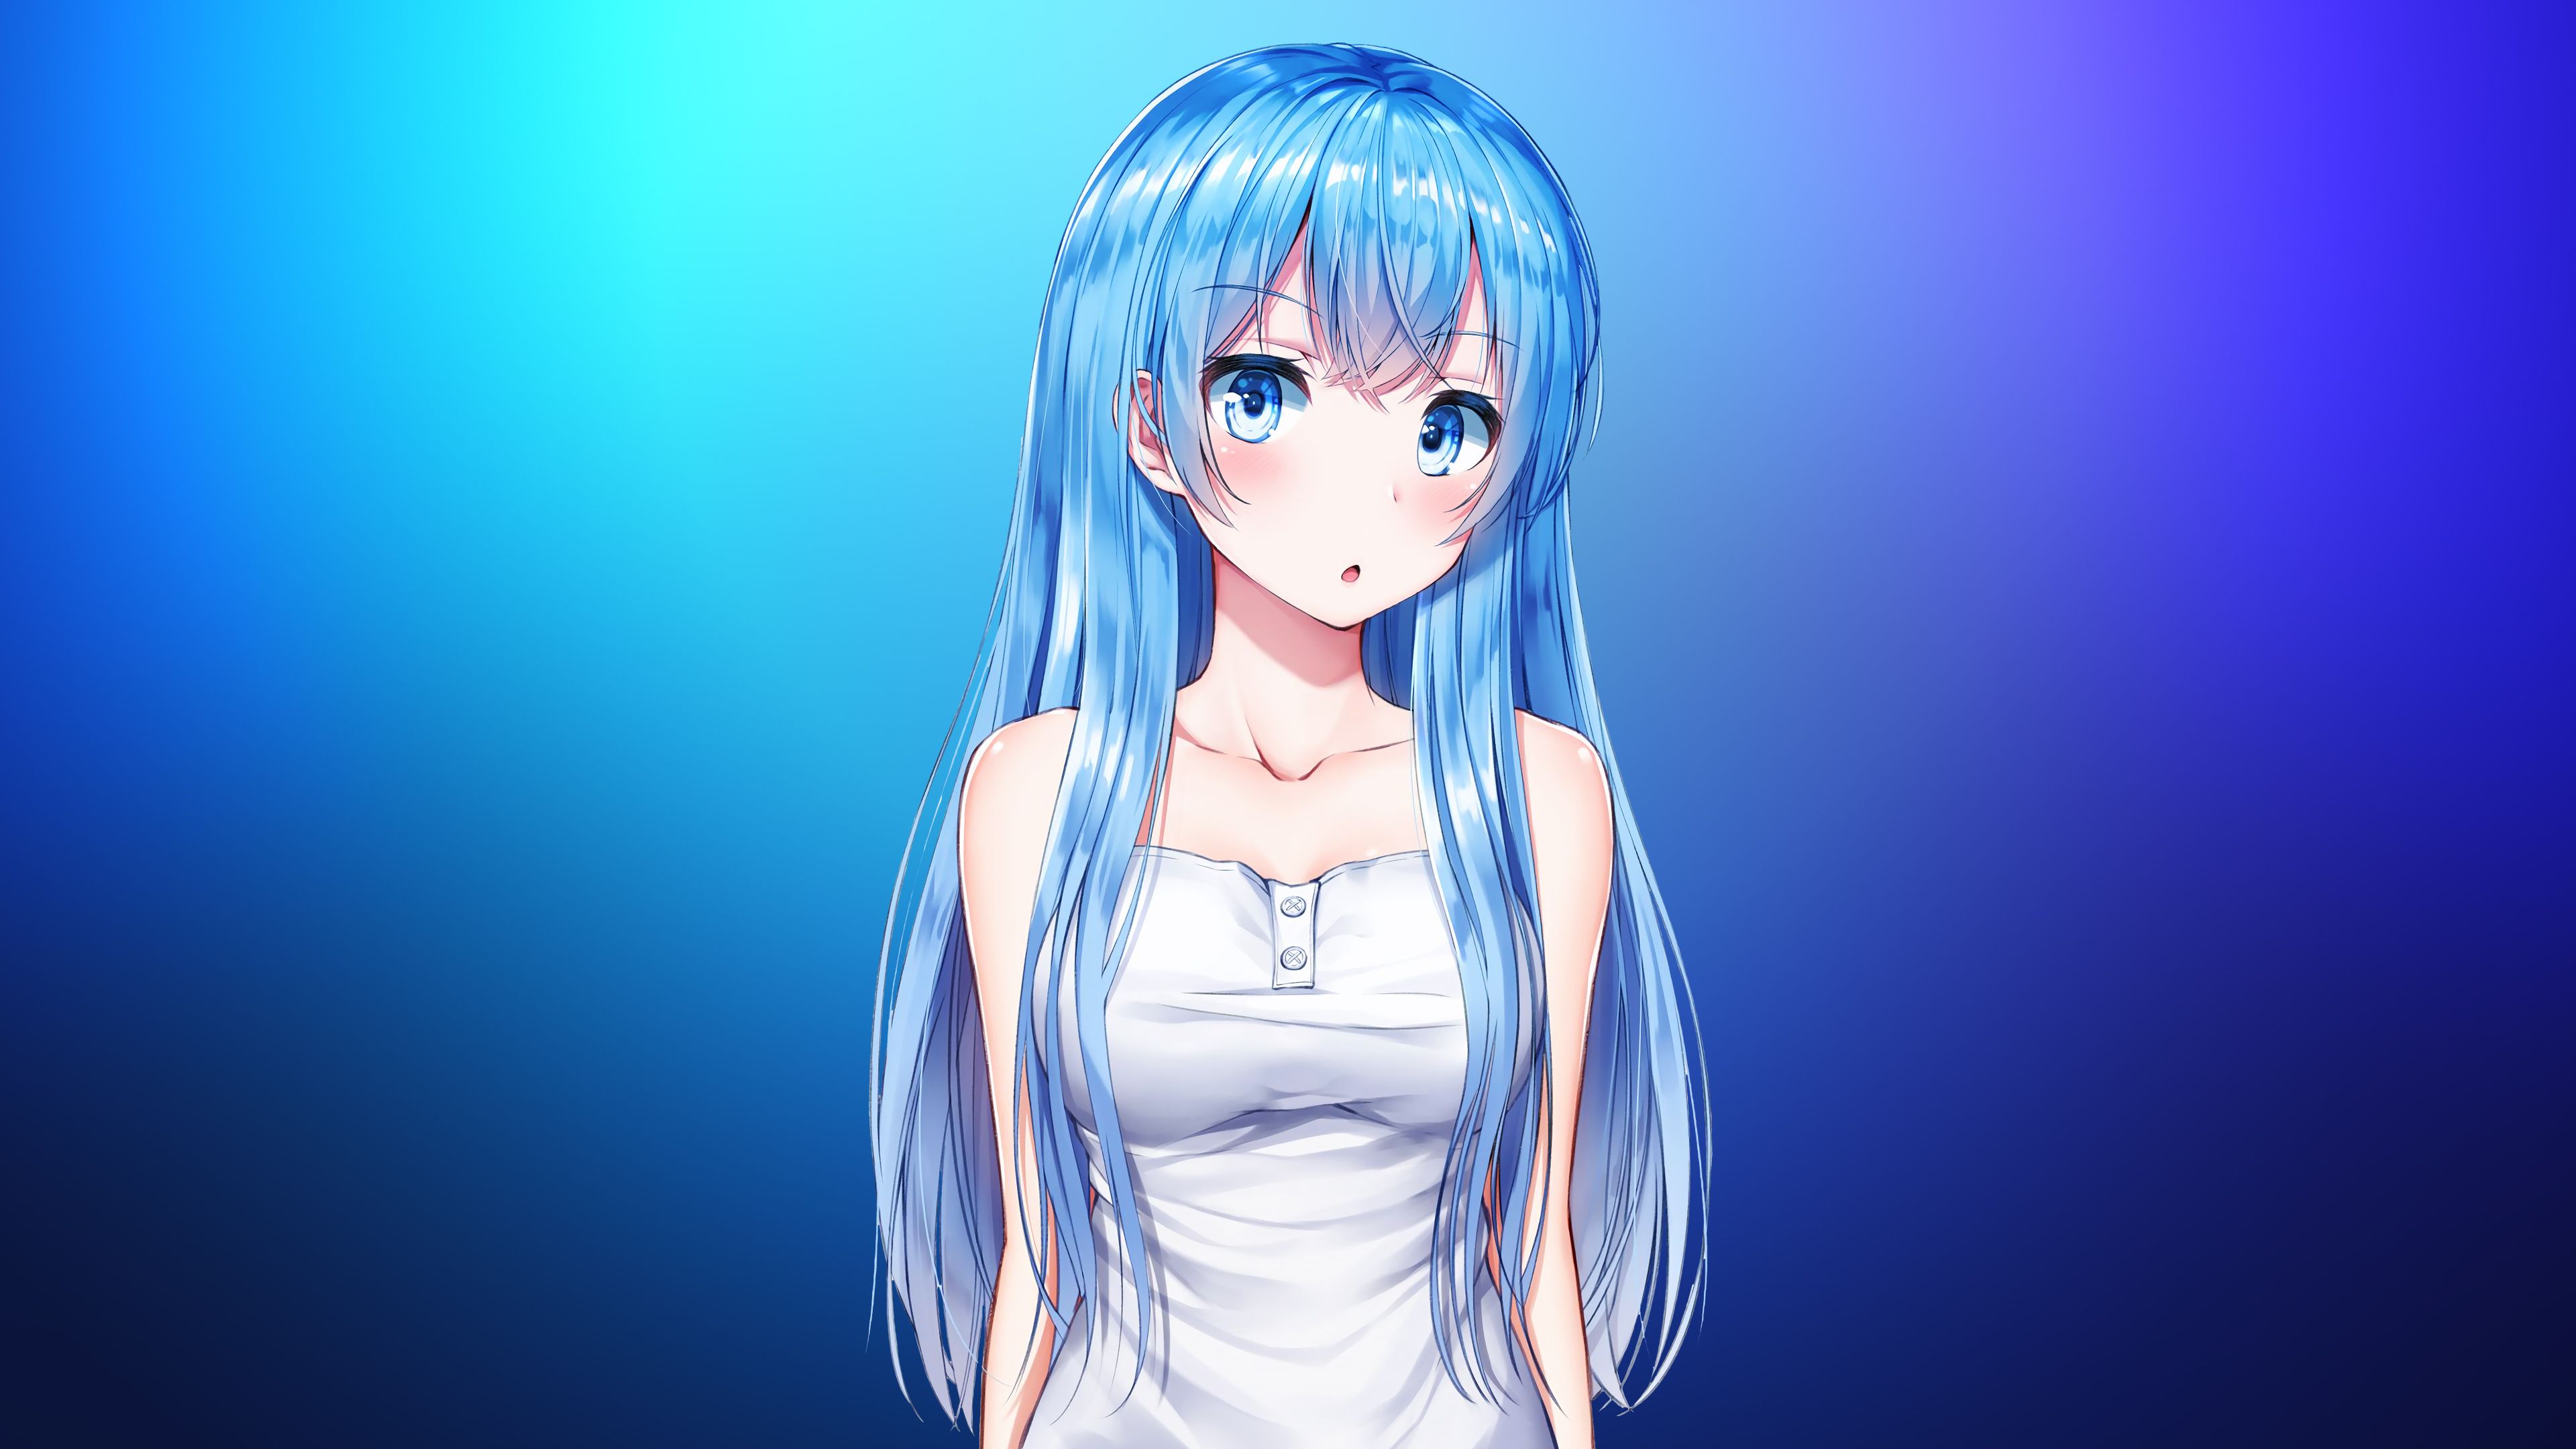 Download 3840x2160 blue hair, anime girl, cute, original 4k wallpaper, uhd wallpaper, 16:9 widescreen wallpaper, 3840x2160 HD image, background, 4863